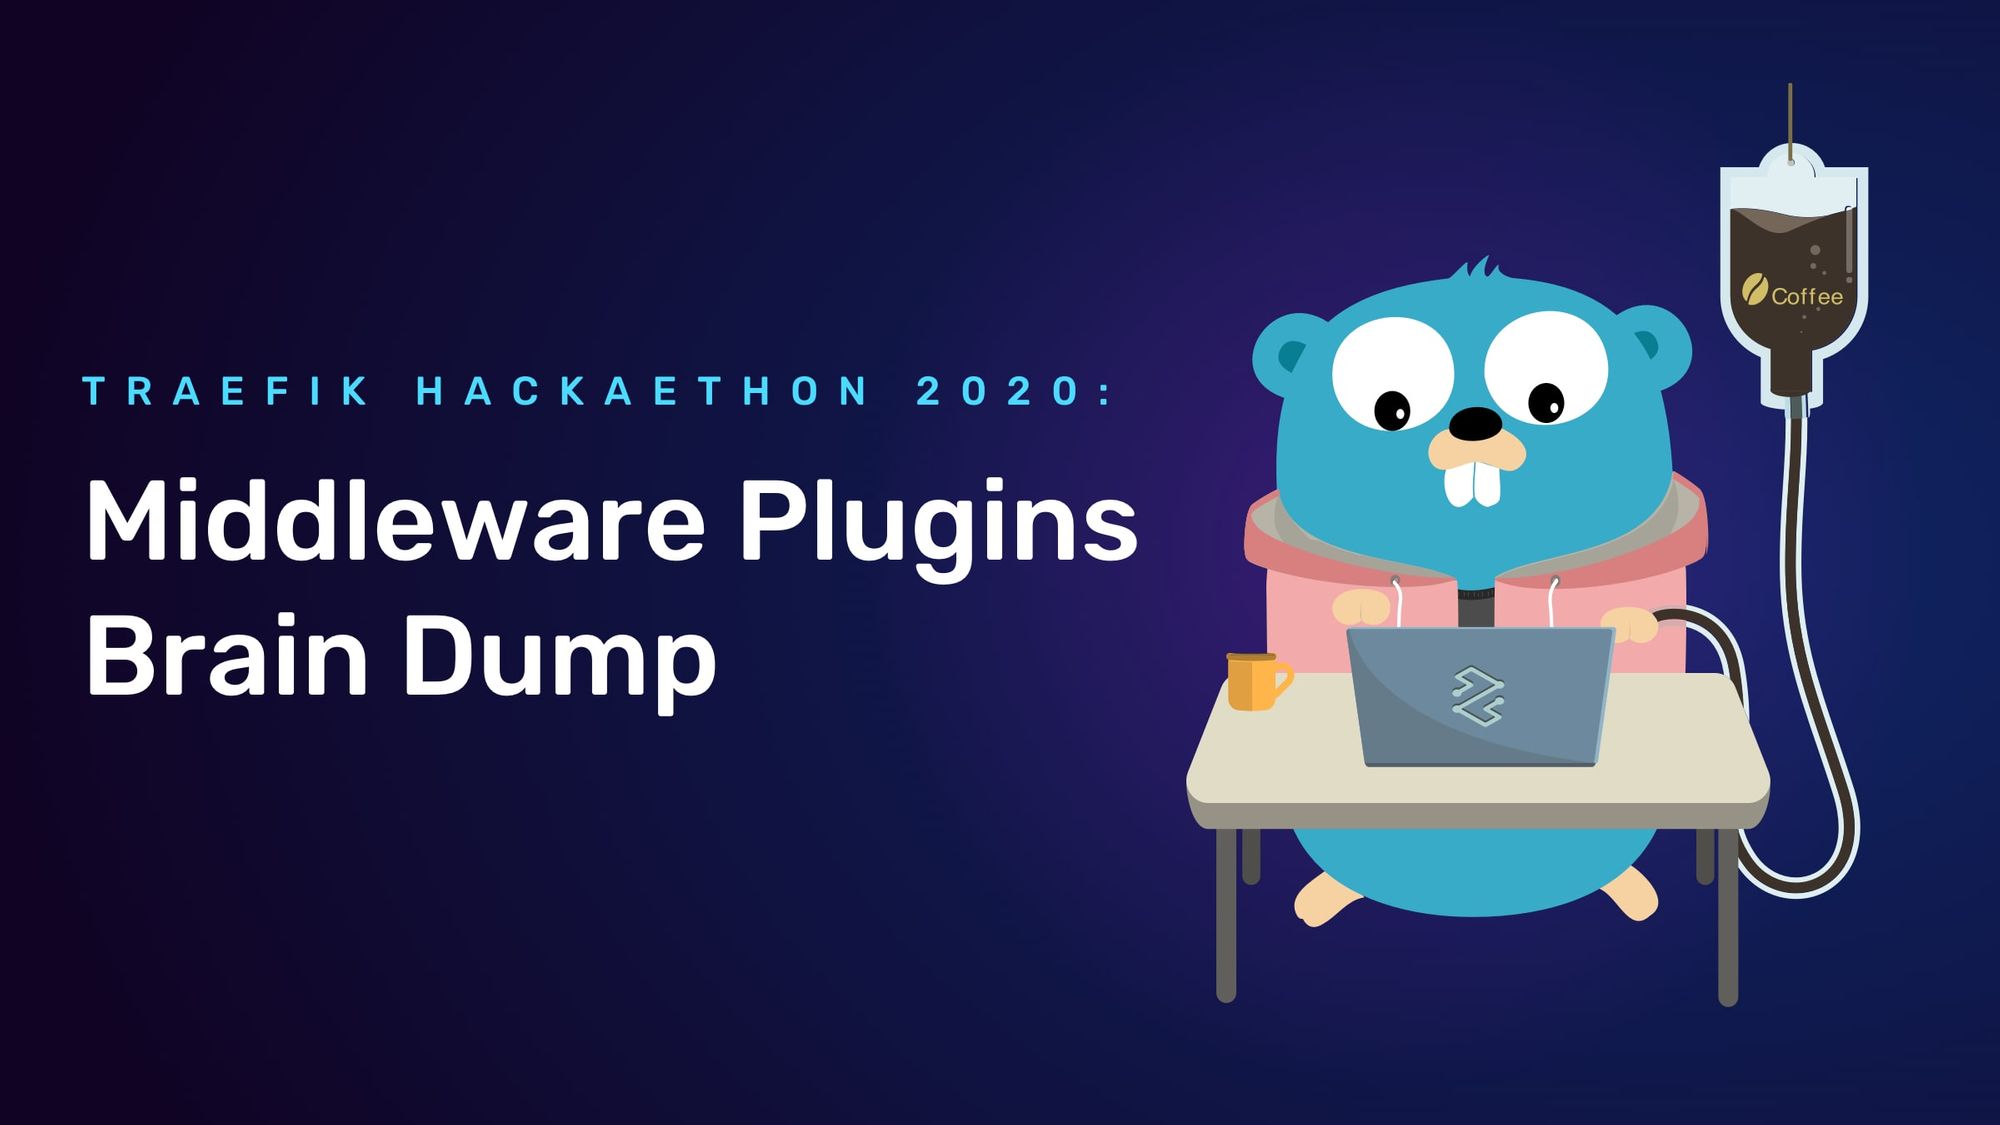 Traefik Hackaethon 2020: Middleware Plugins Brain Dump